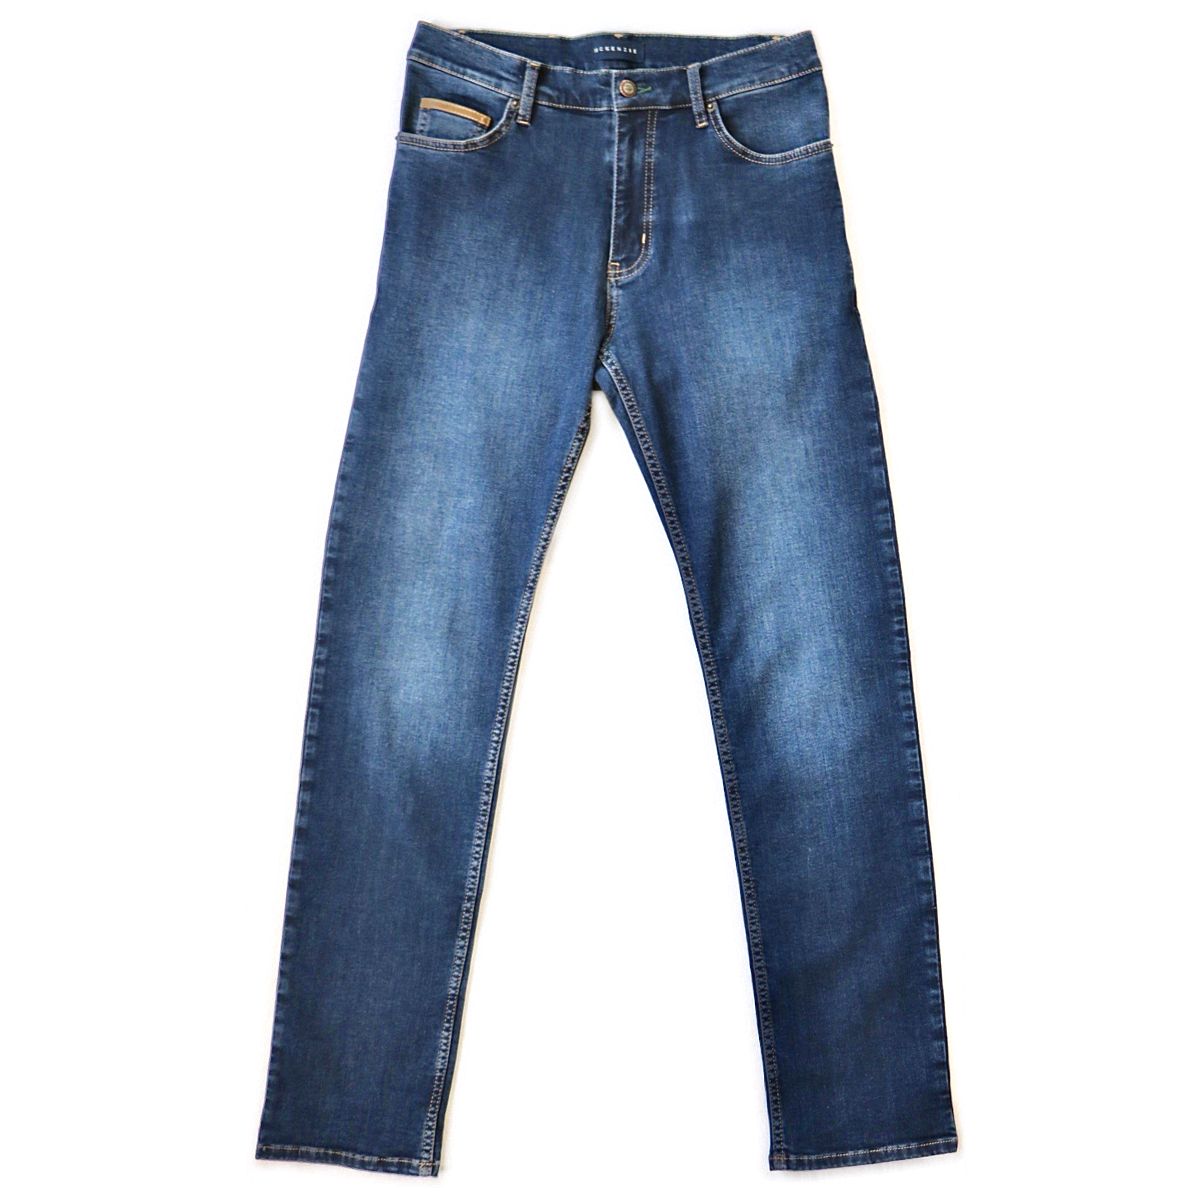 Men's Jeans - Charleston Denim Medium Wash